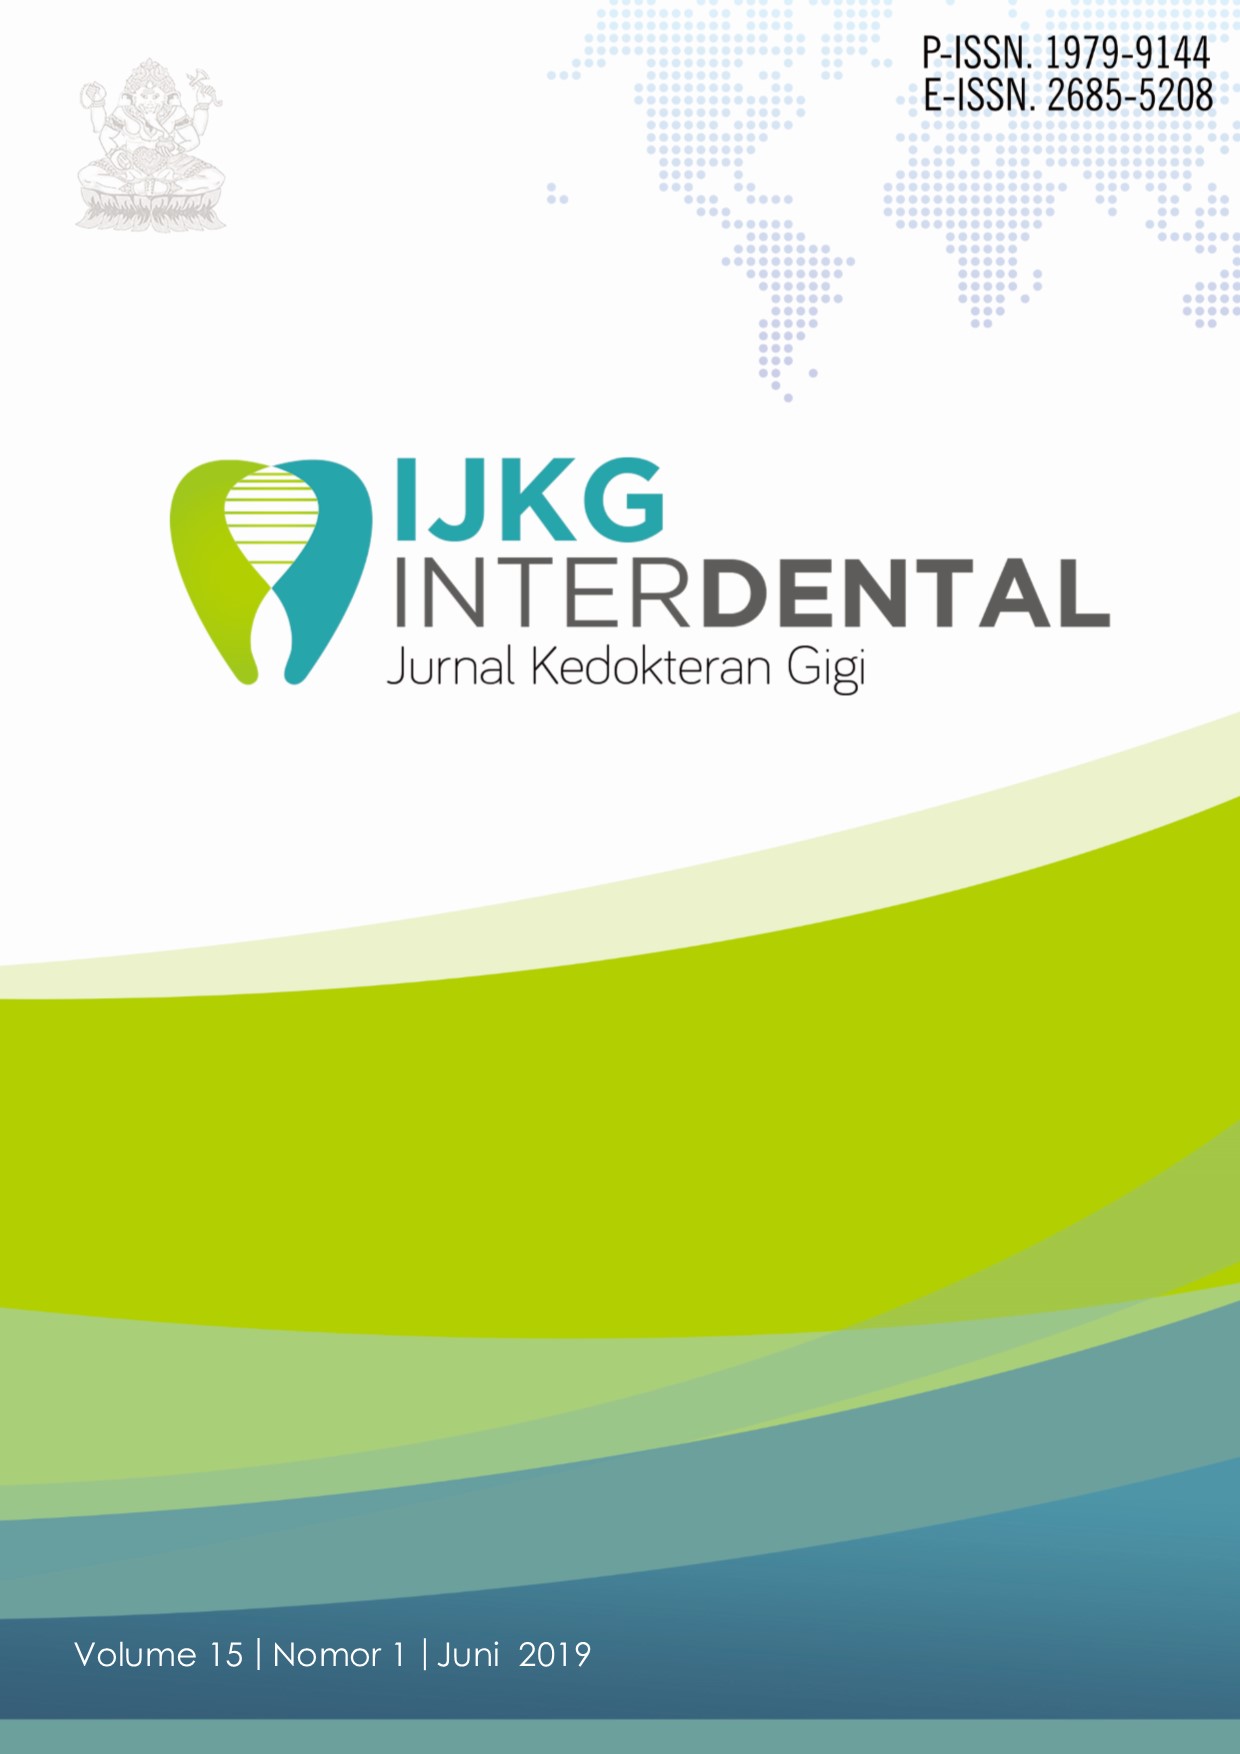 					View Vol. 15 No. 1 (2019): Interdental Jurnal Kedokteran Gigi (IJKG)
				